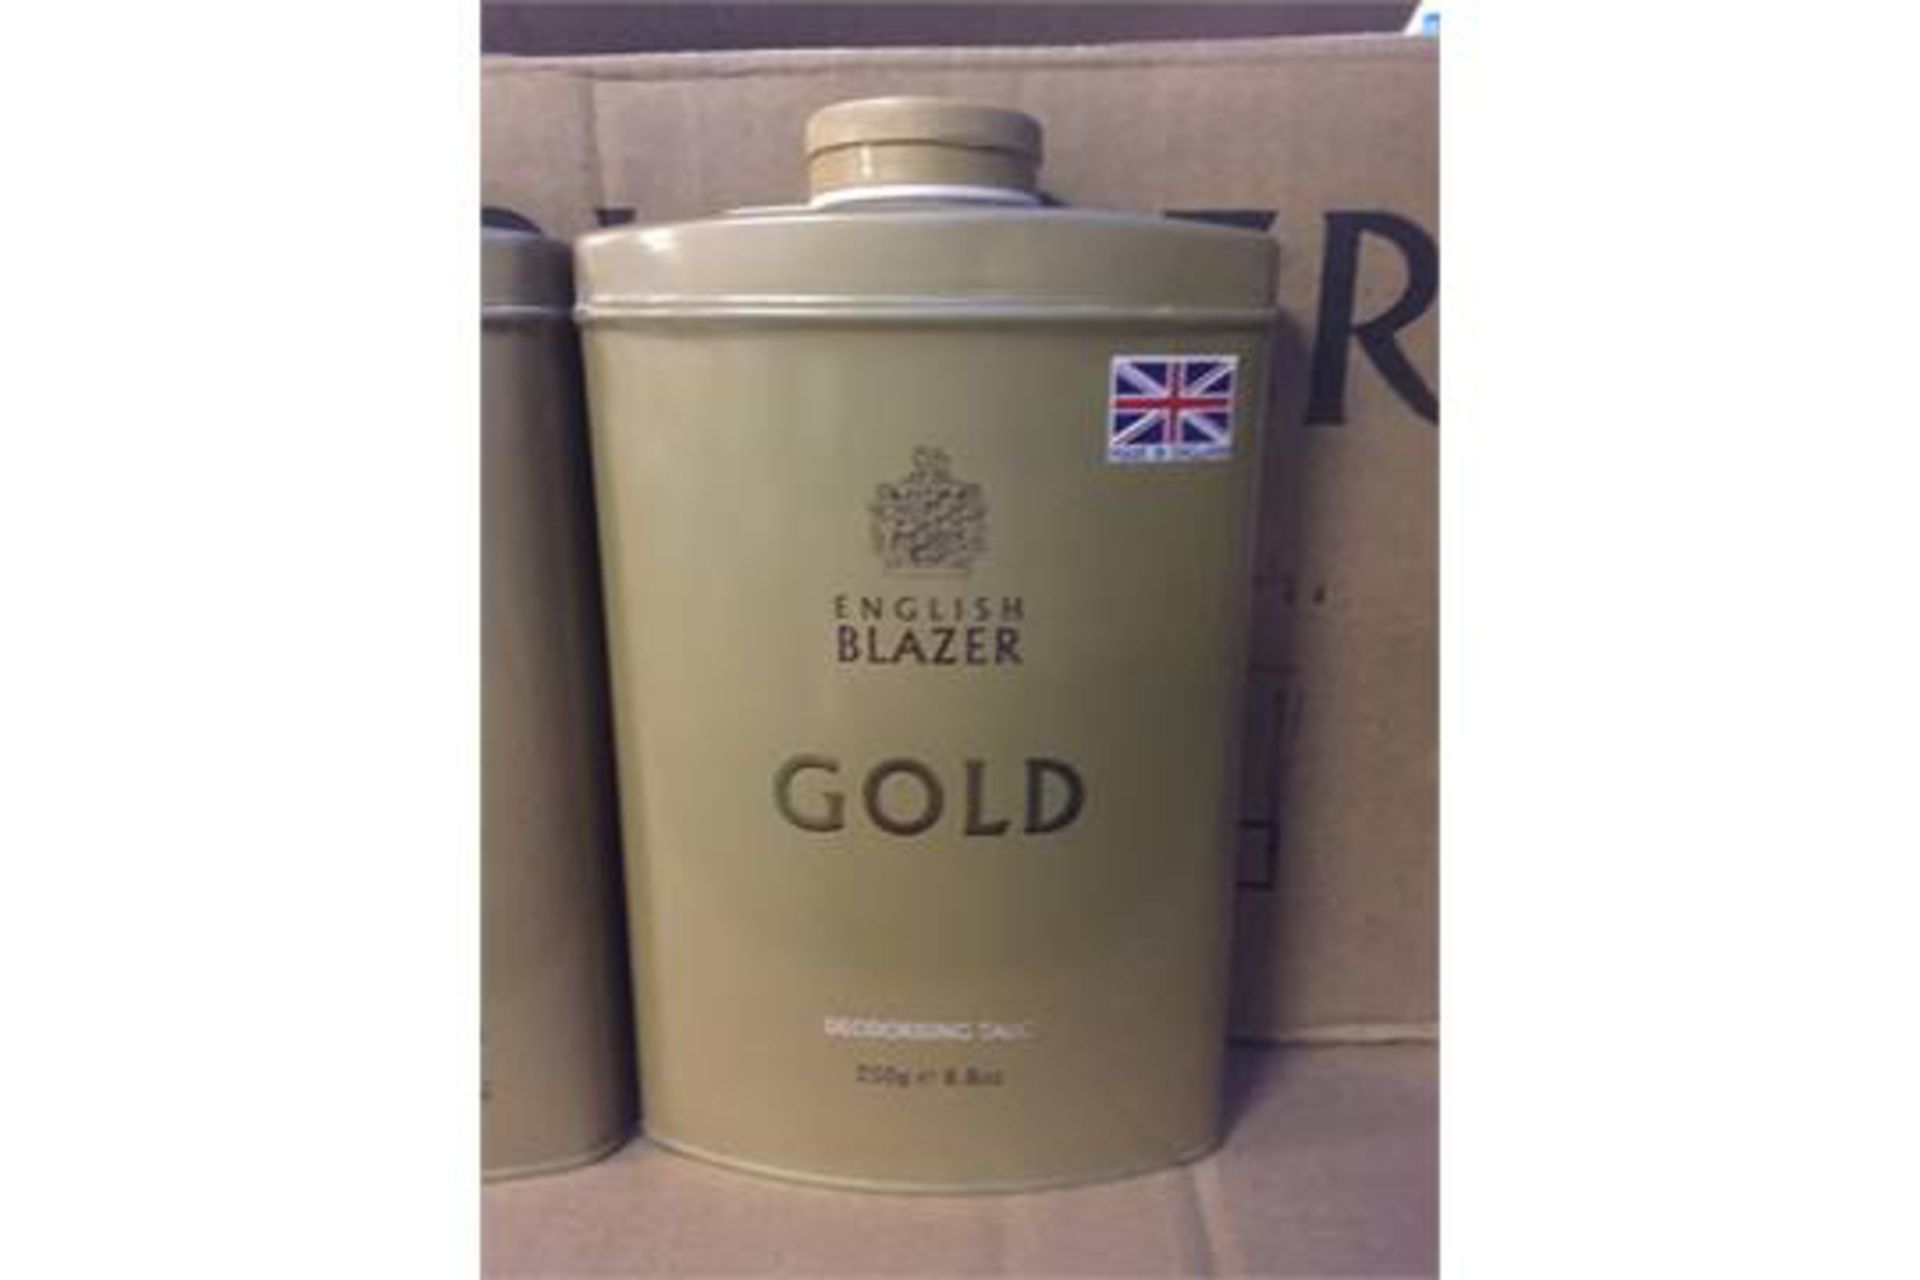 24 x English Blazer Gold DeOdorising talc 250g. 'Shower your body with the cool exhilarating